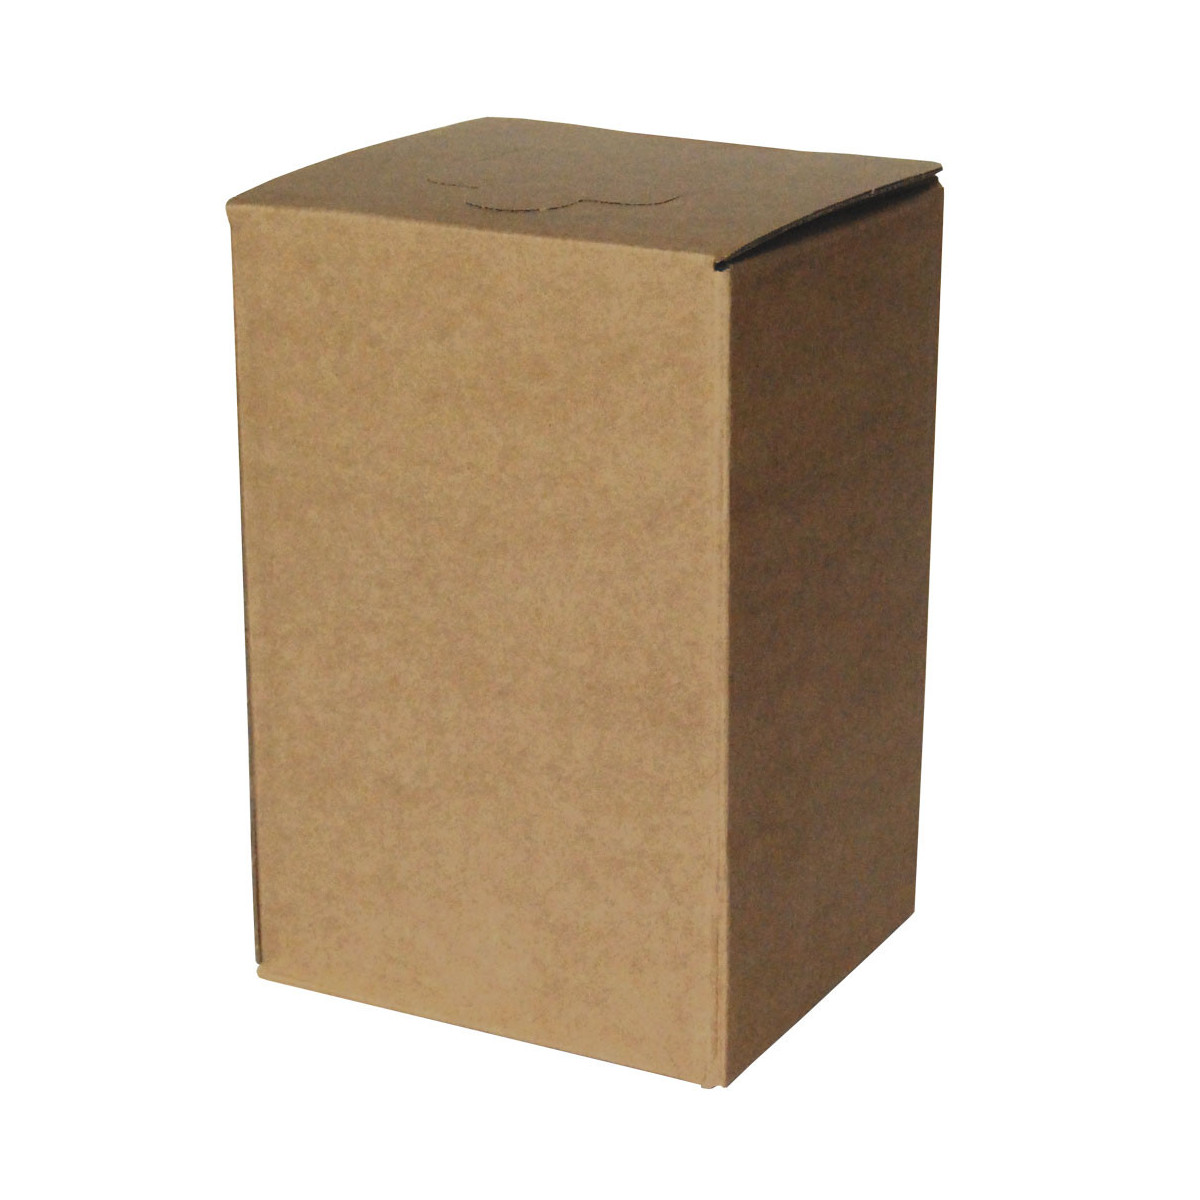 Box BROWN for BAG in BOX 3 l